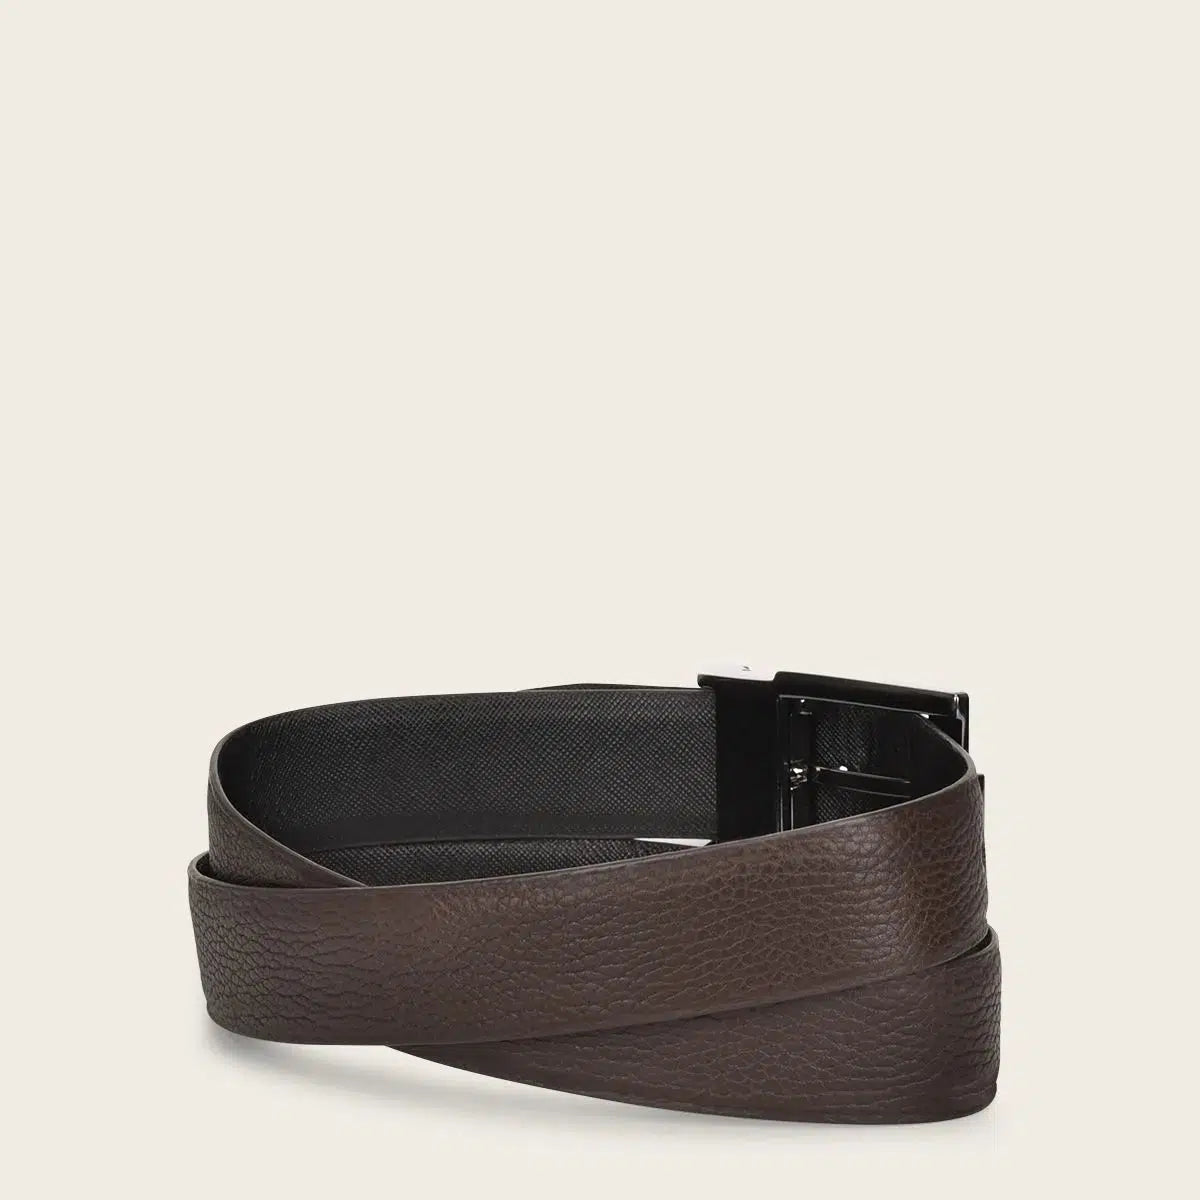 CS552RS - Cuadra brown casual western cowhide leather belt for men.-CUADRA-Kuet-Cuadra-Boots